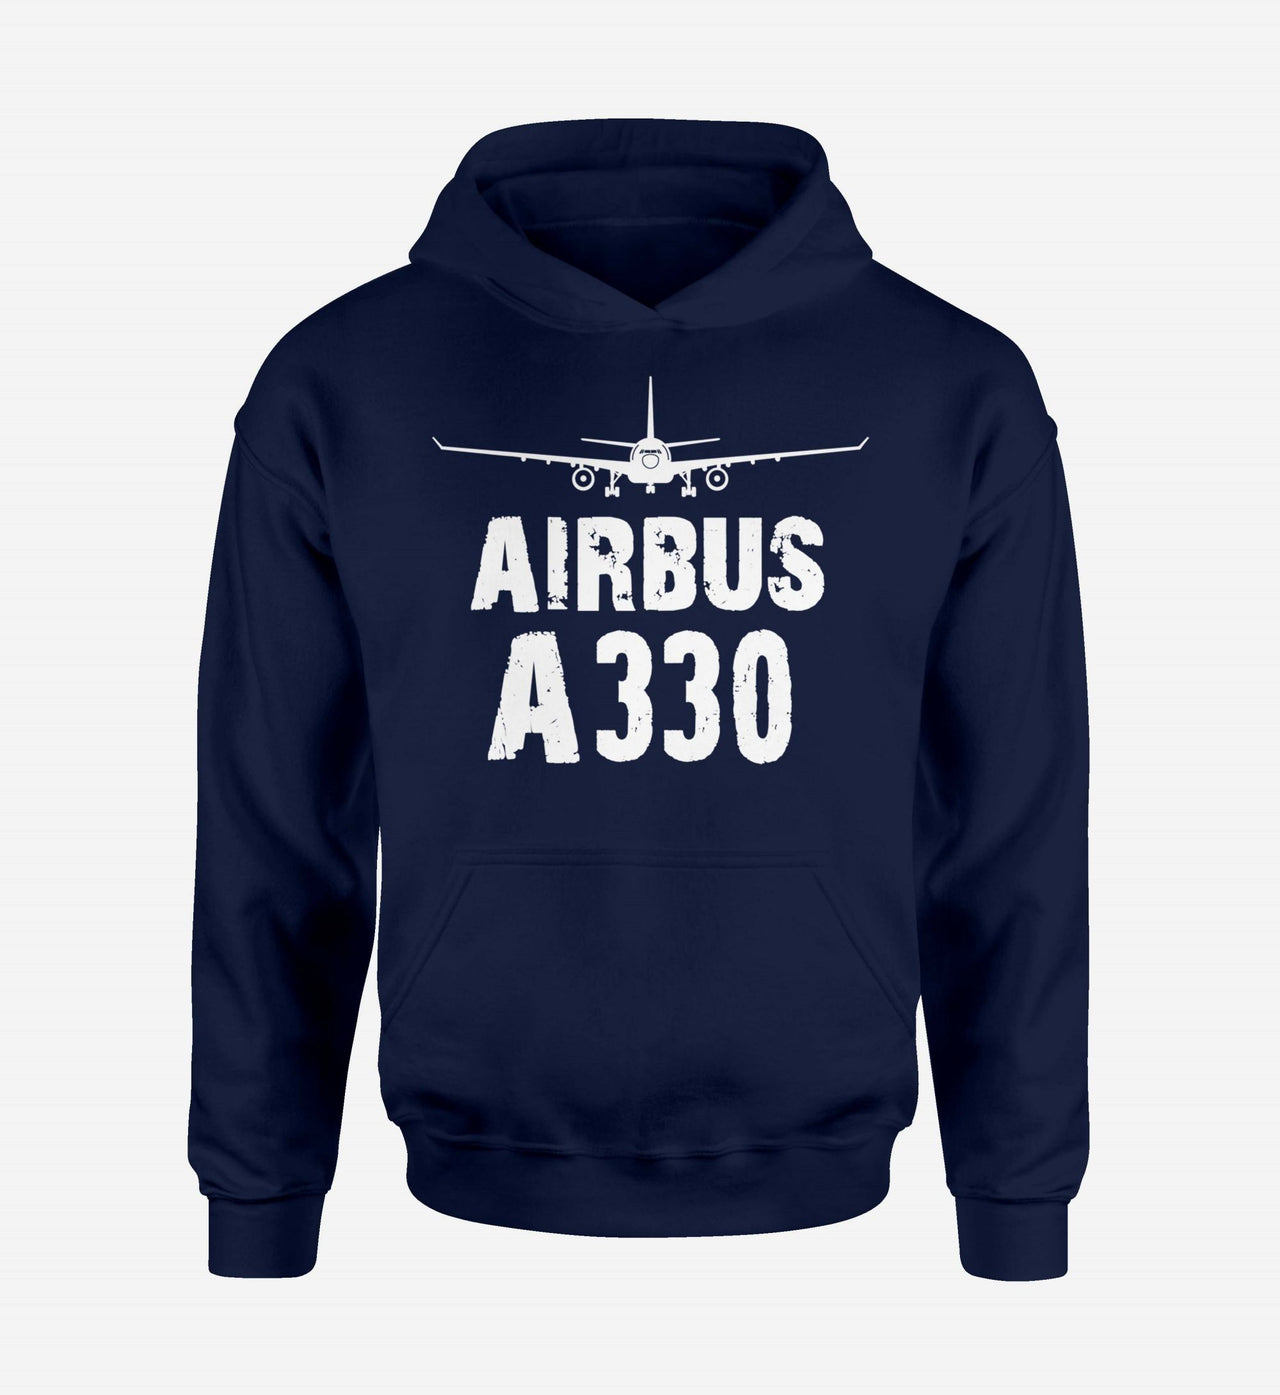 Airbus A330 & Plane Designed Hoodies